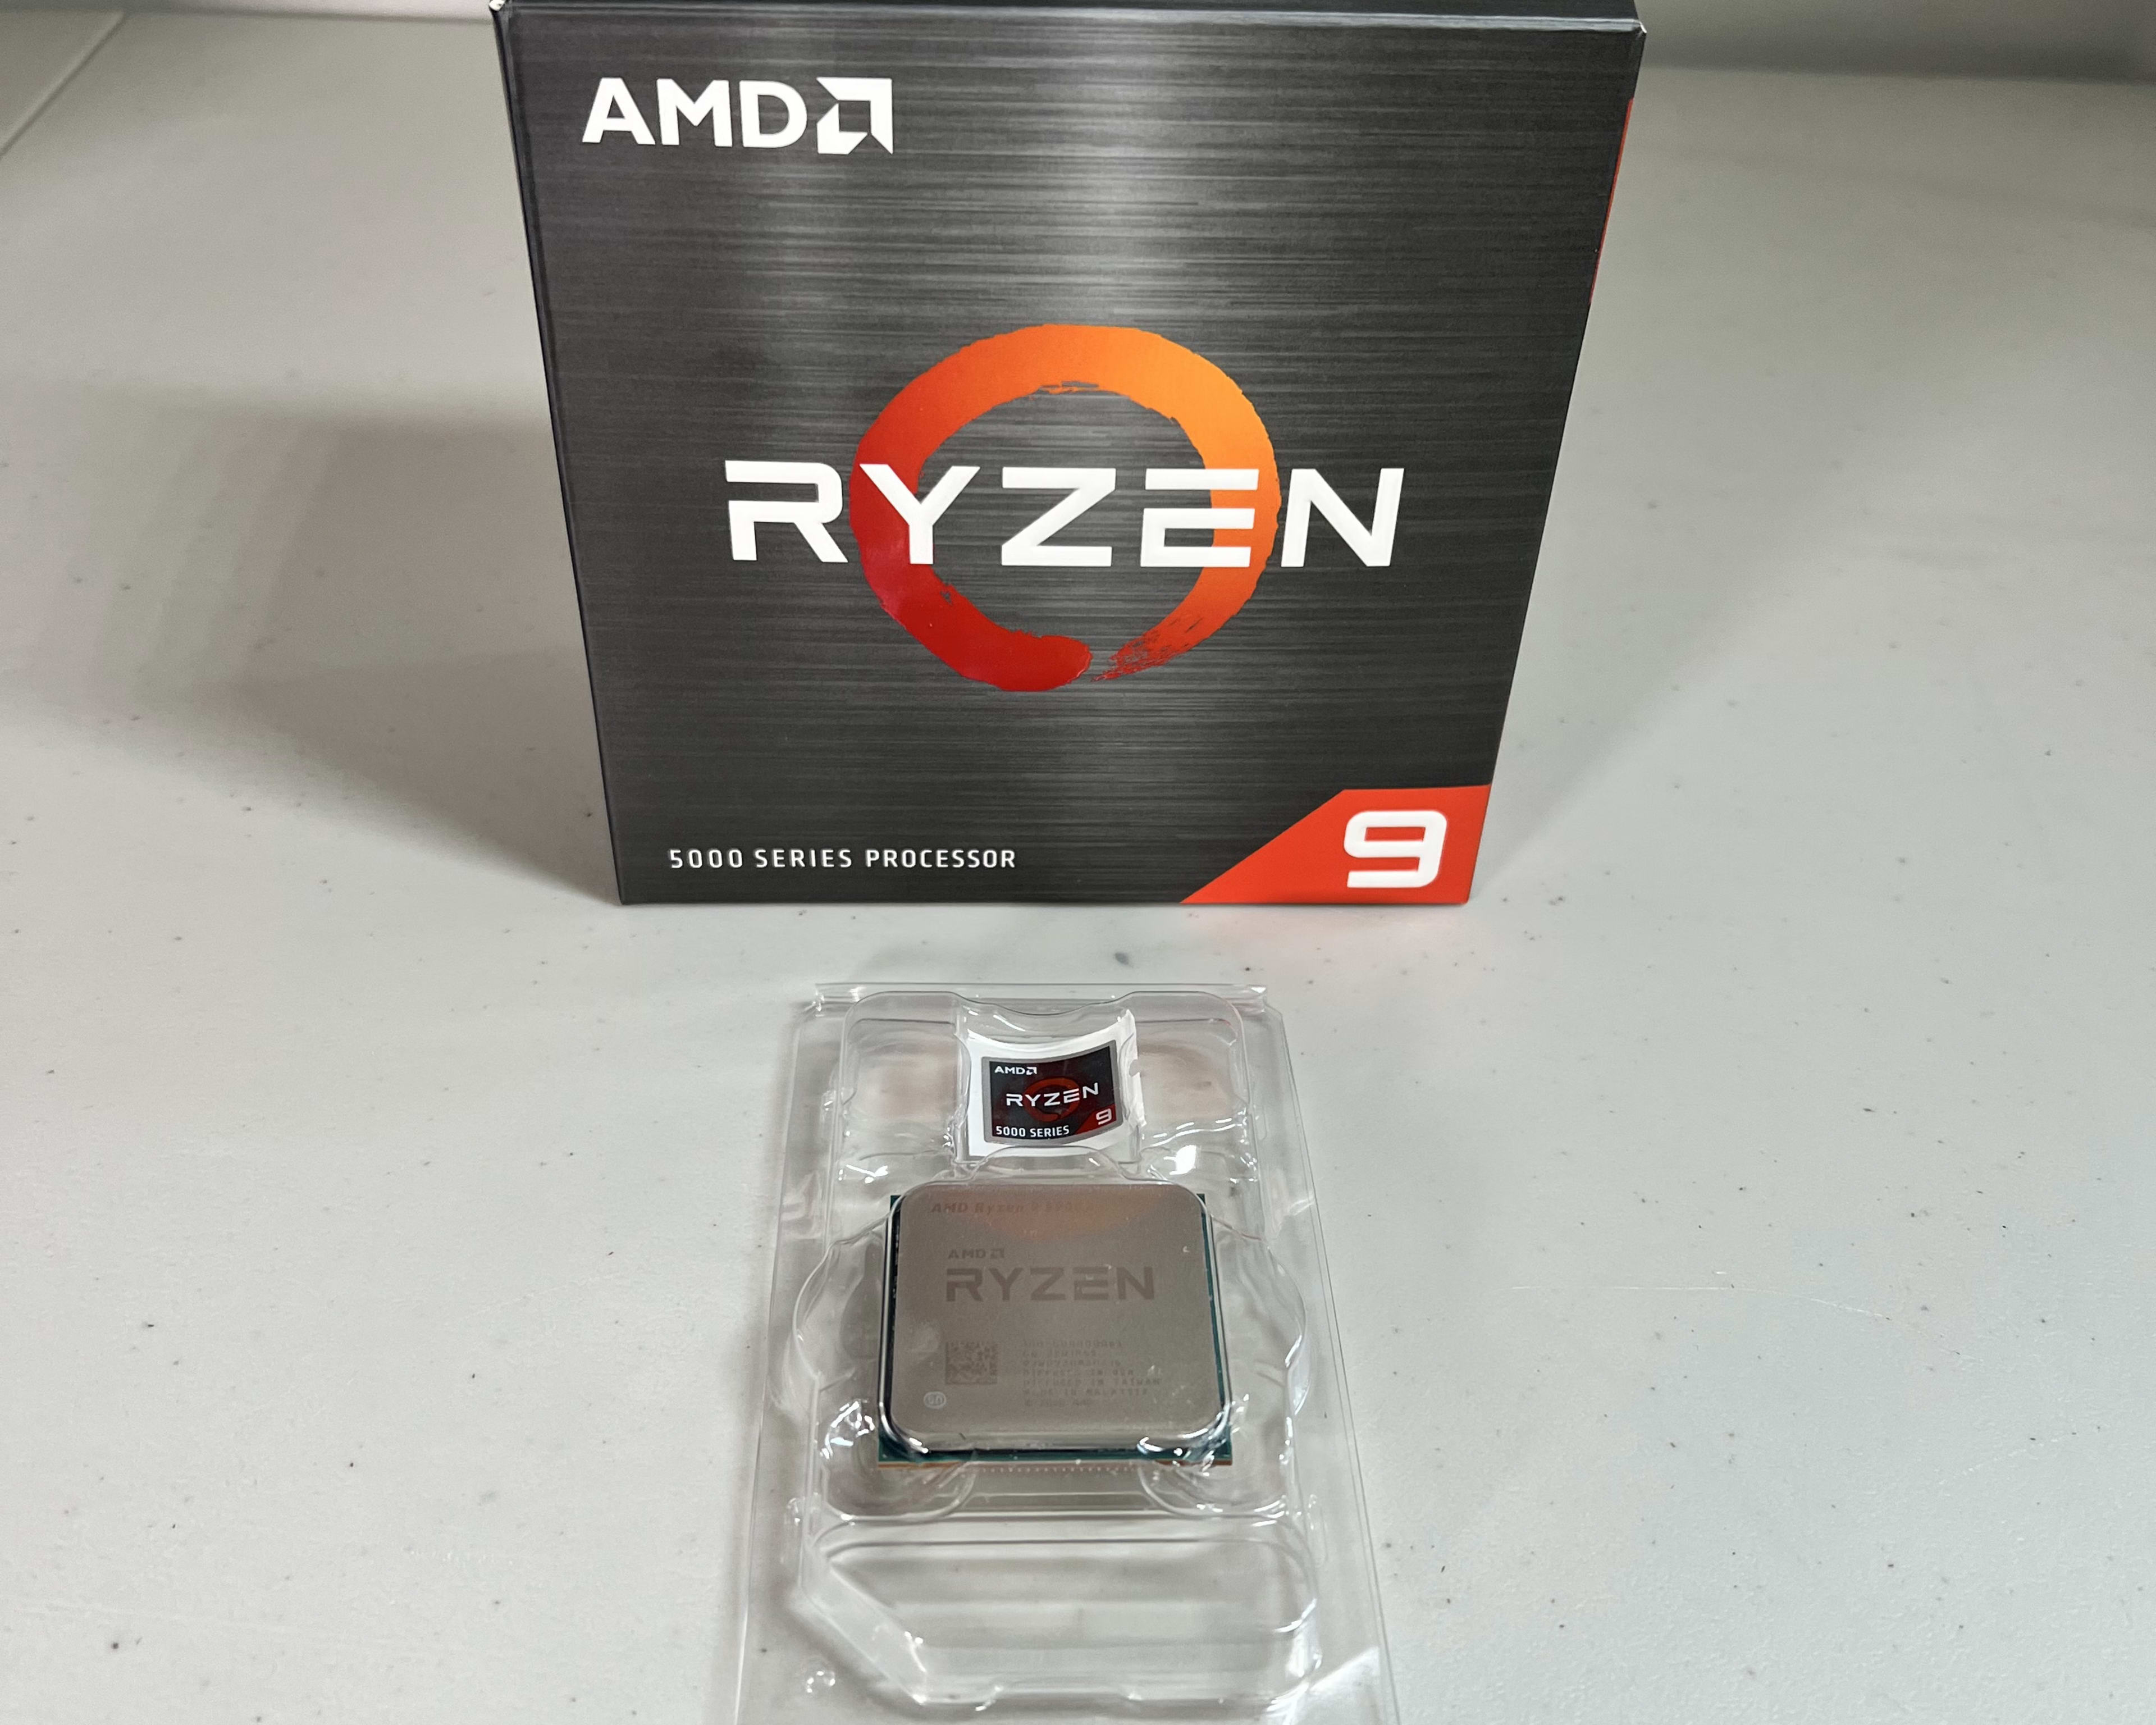 AMD Ryzen 9 5900X Desktop Processor 4.8GHz, 12 Cores, 24 Threads